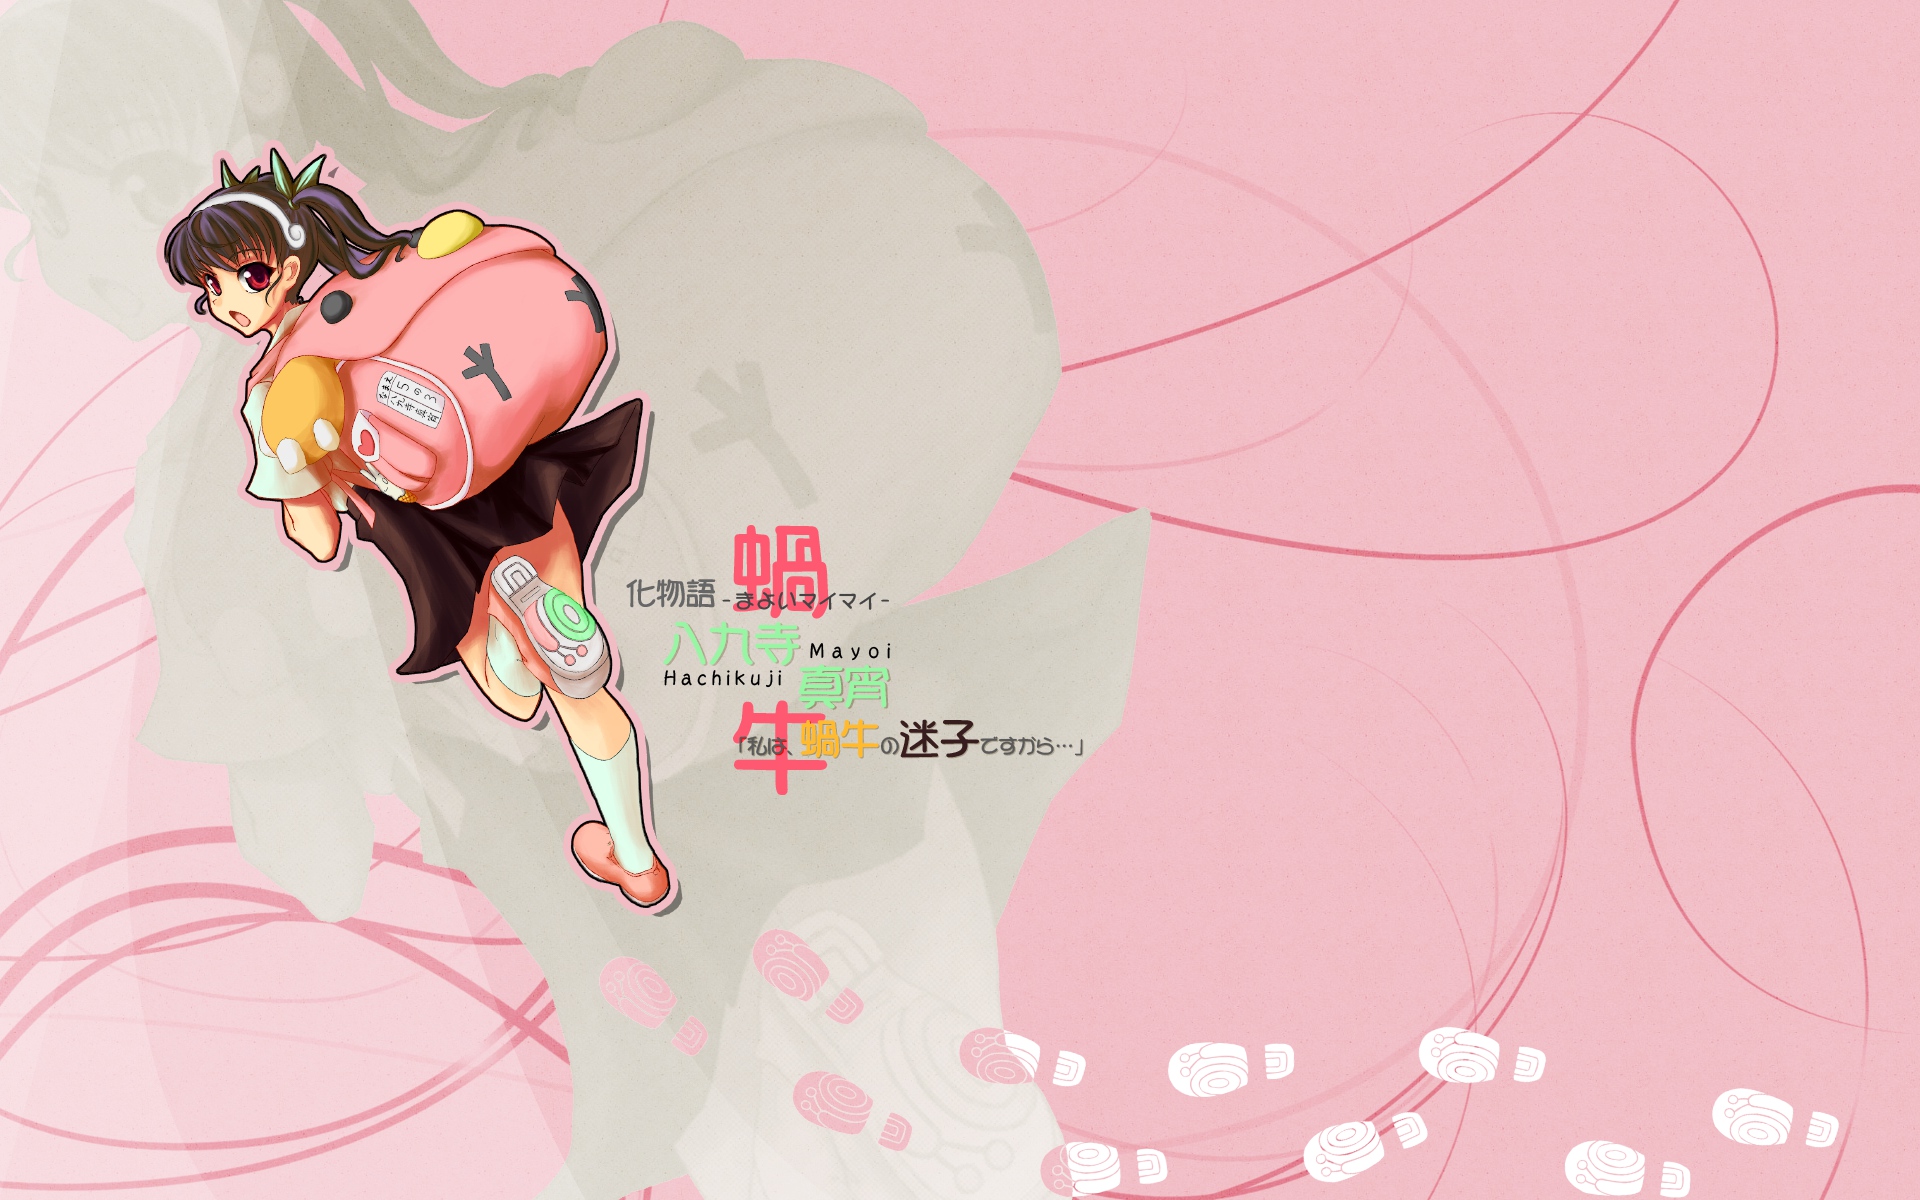 Mayoi Hachikuji from Monogatari Series, an anime character in a desktop wallpaper.